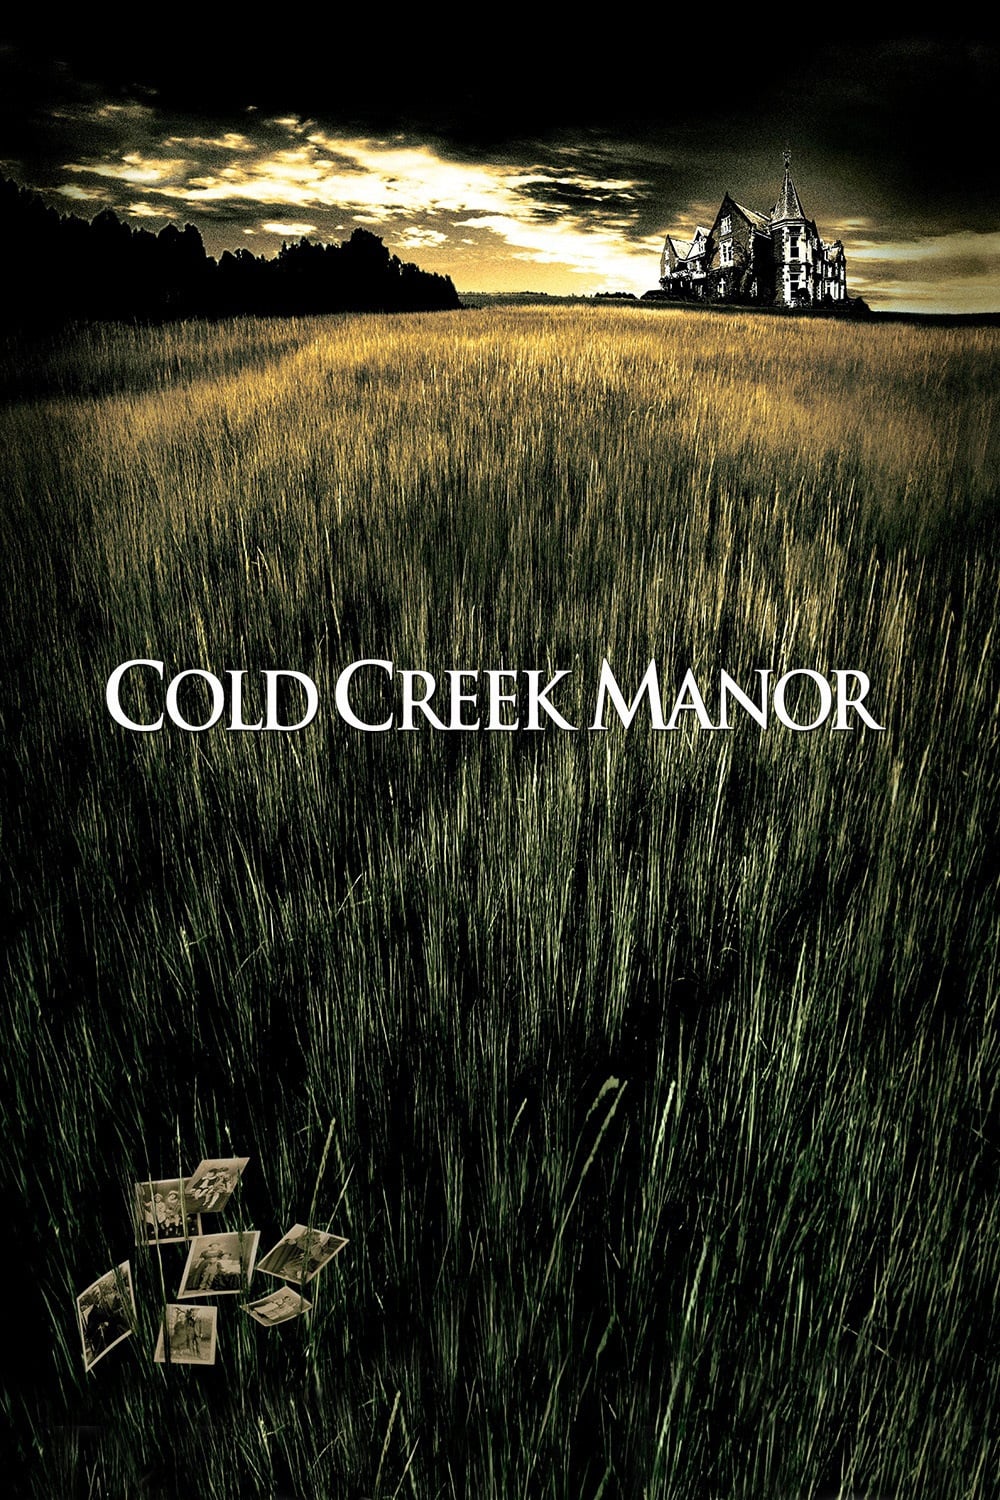 Vidiecke sidlo / Cold Creek Manor (2003)(CZ)[Web-DL][720p]  = CSFD 54%